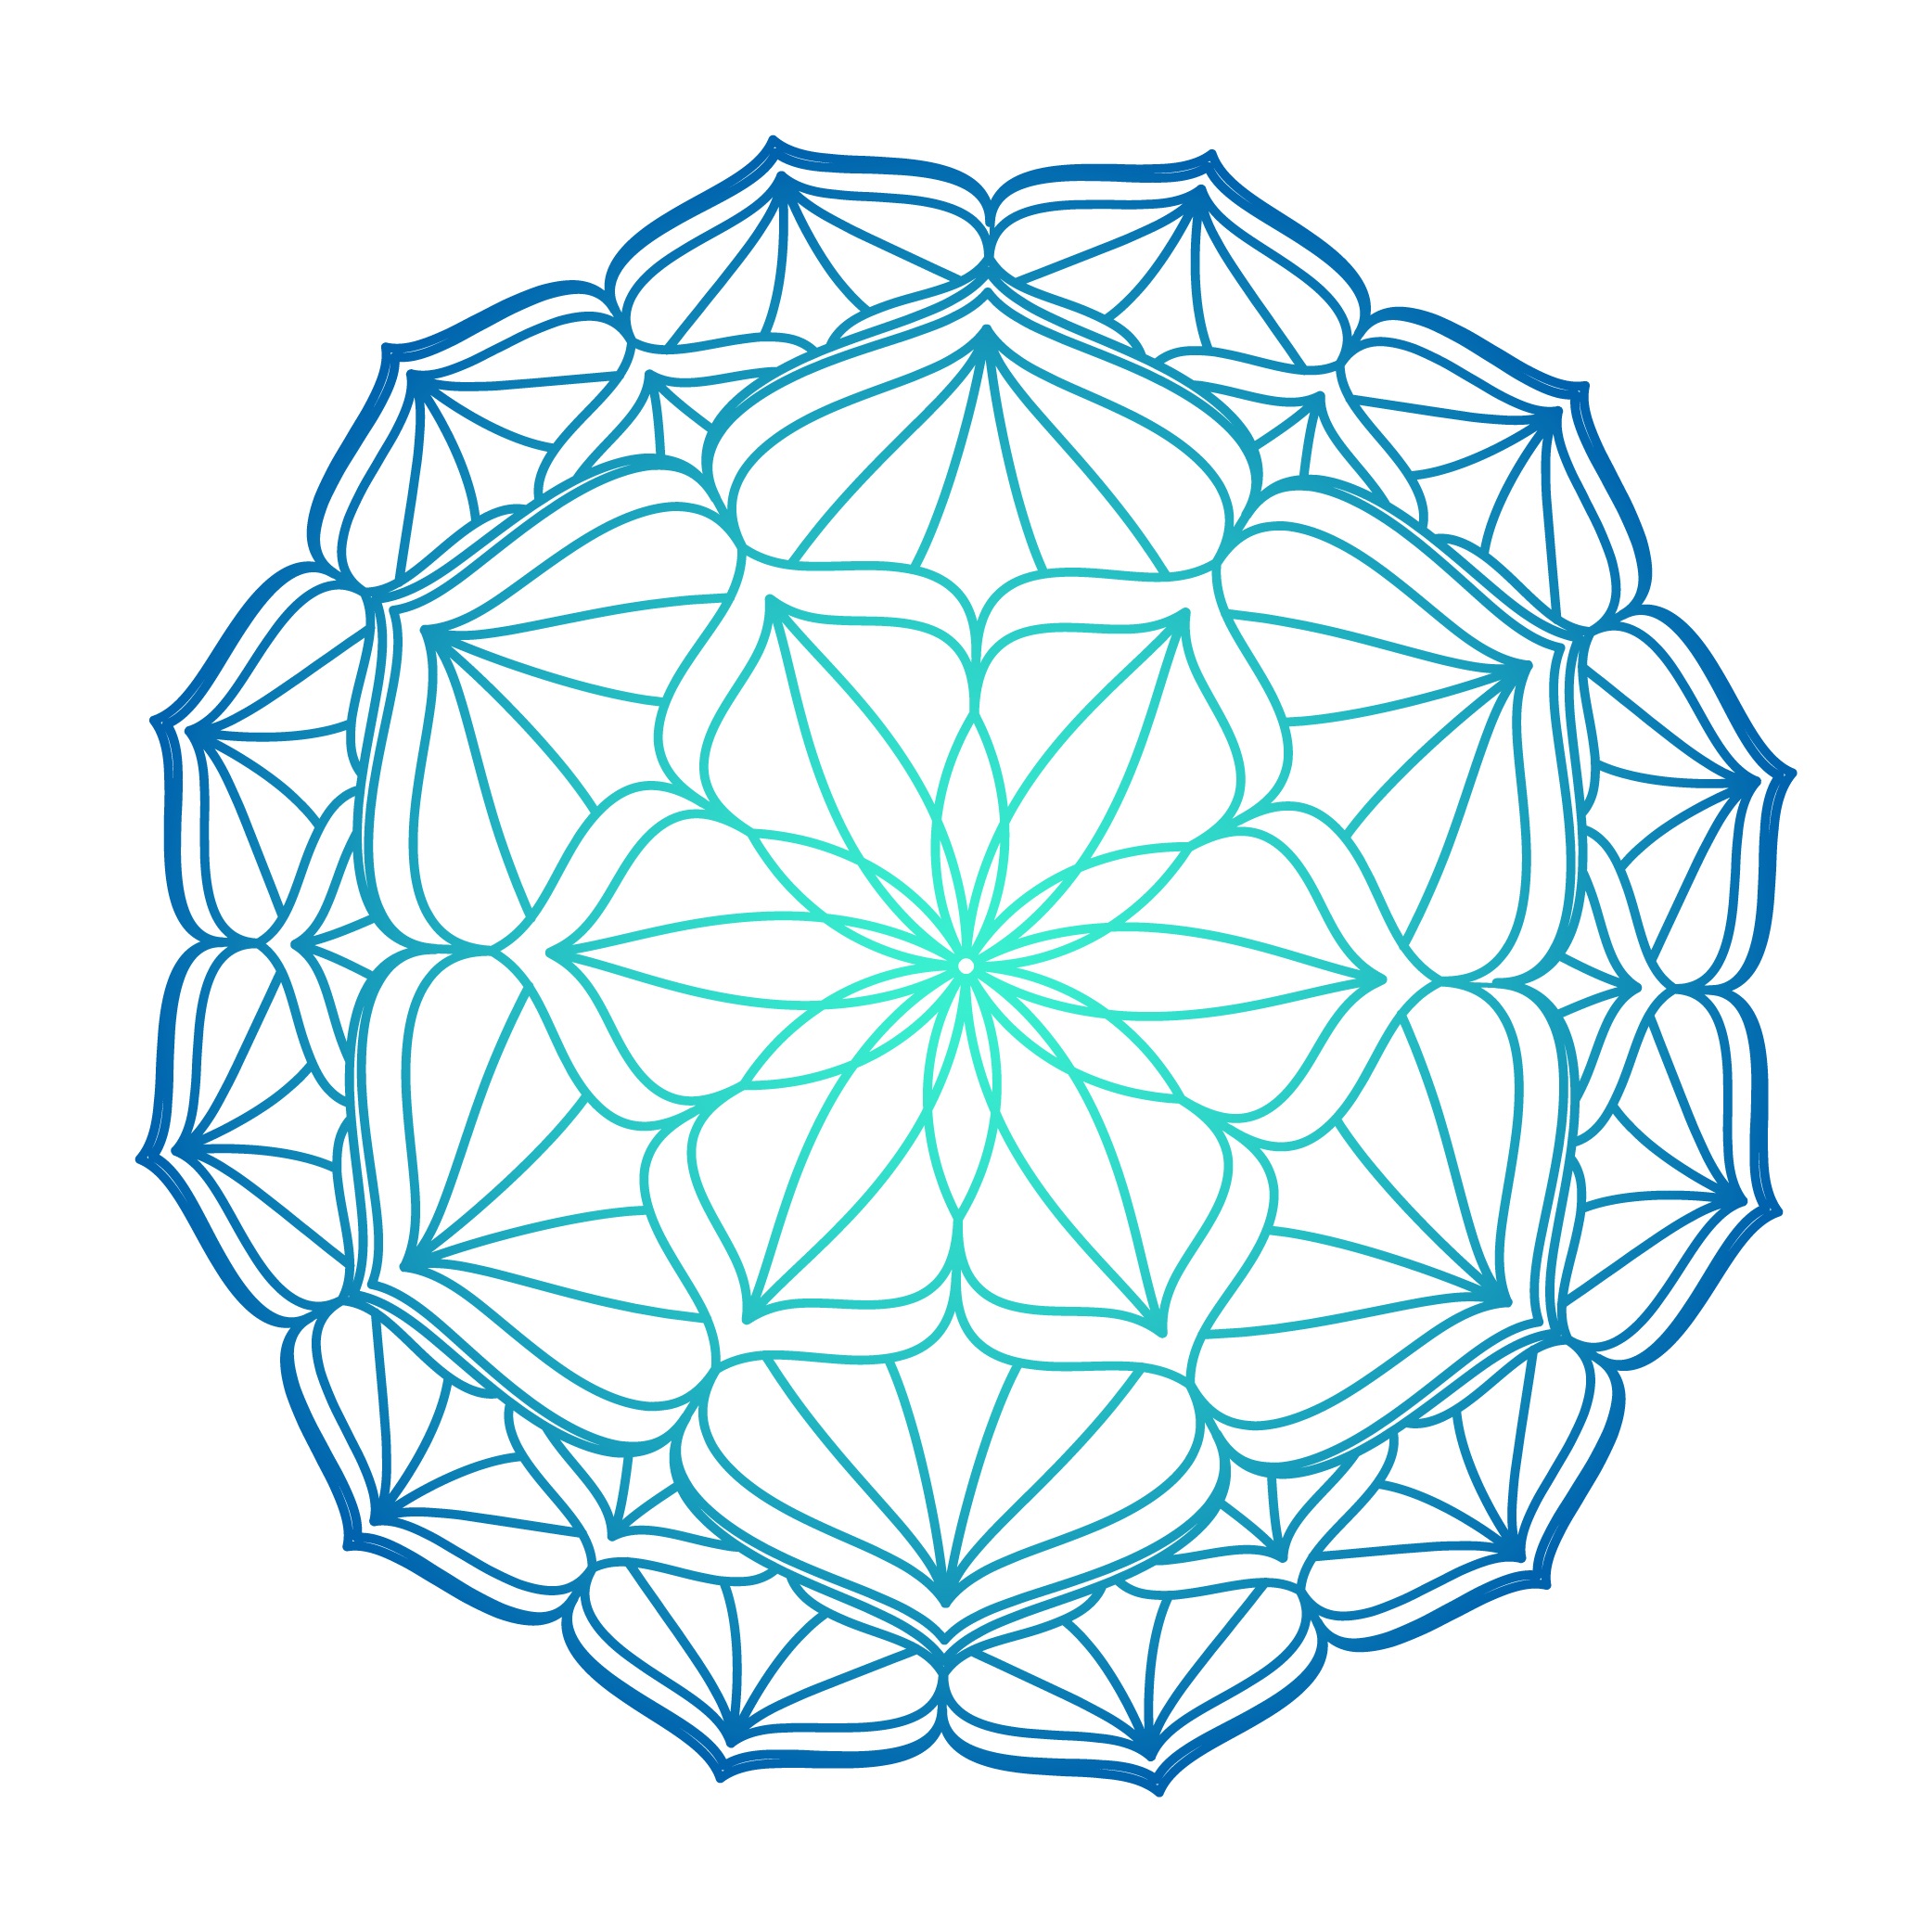 Download Mandala ornament vector image 329780 - Download Free ...